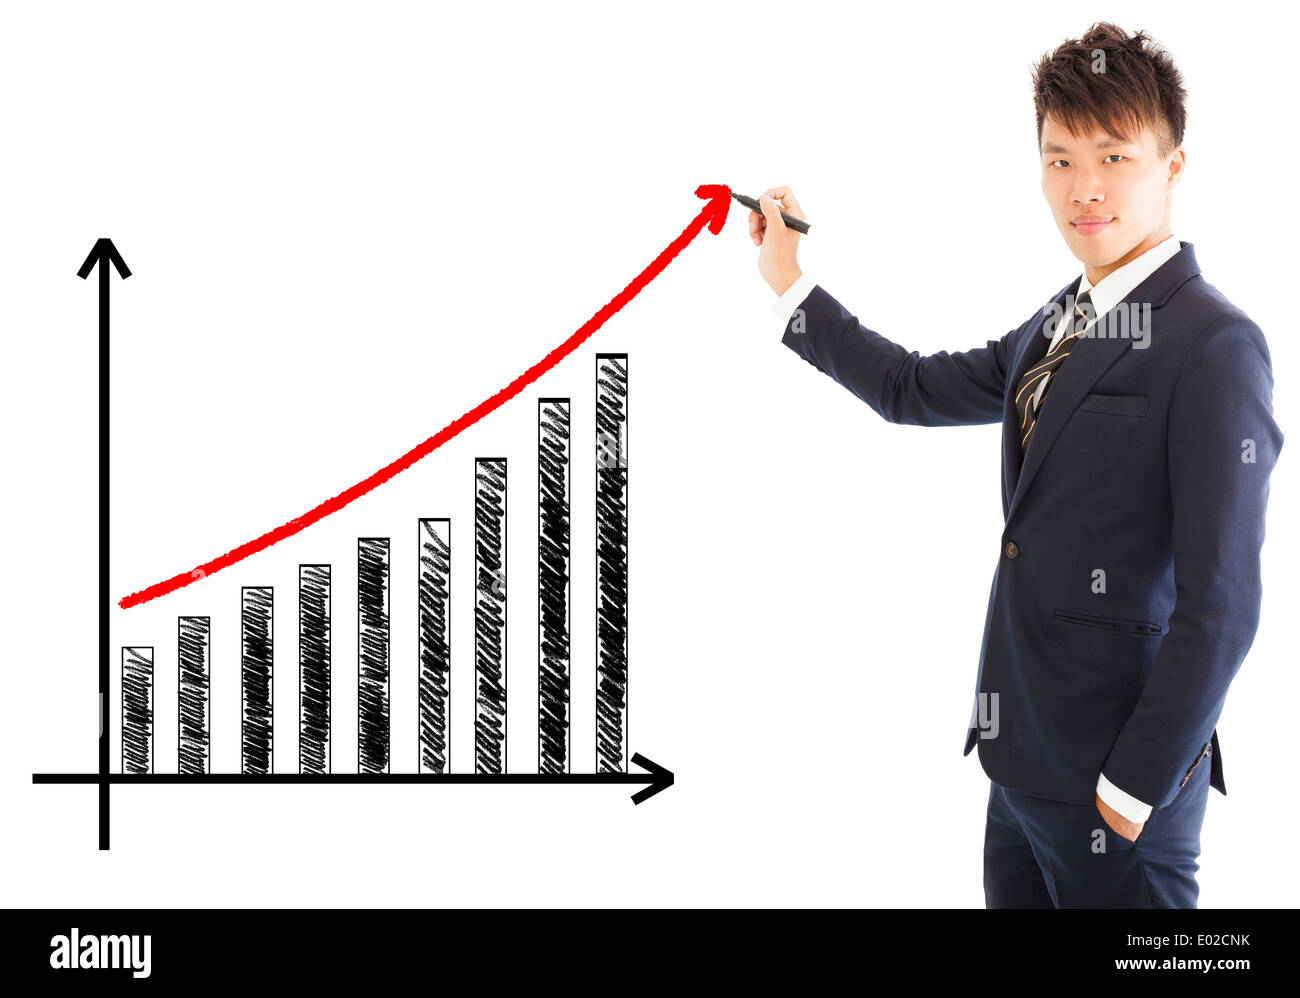 businessman draw a marketing growth chart Stock Photo